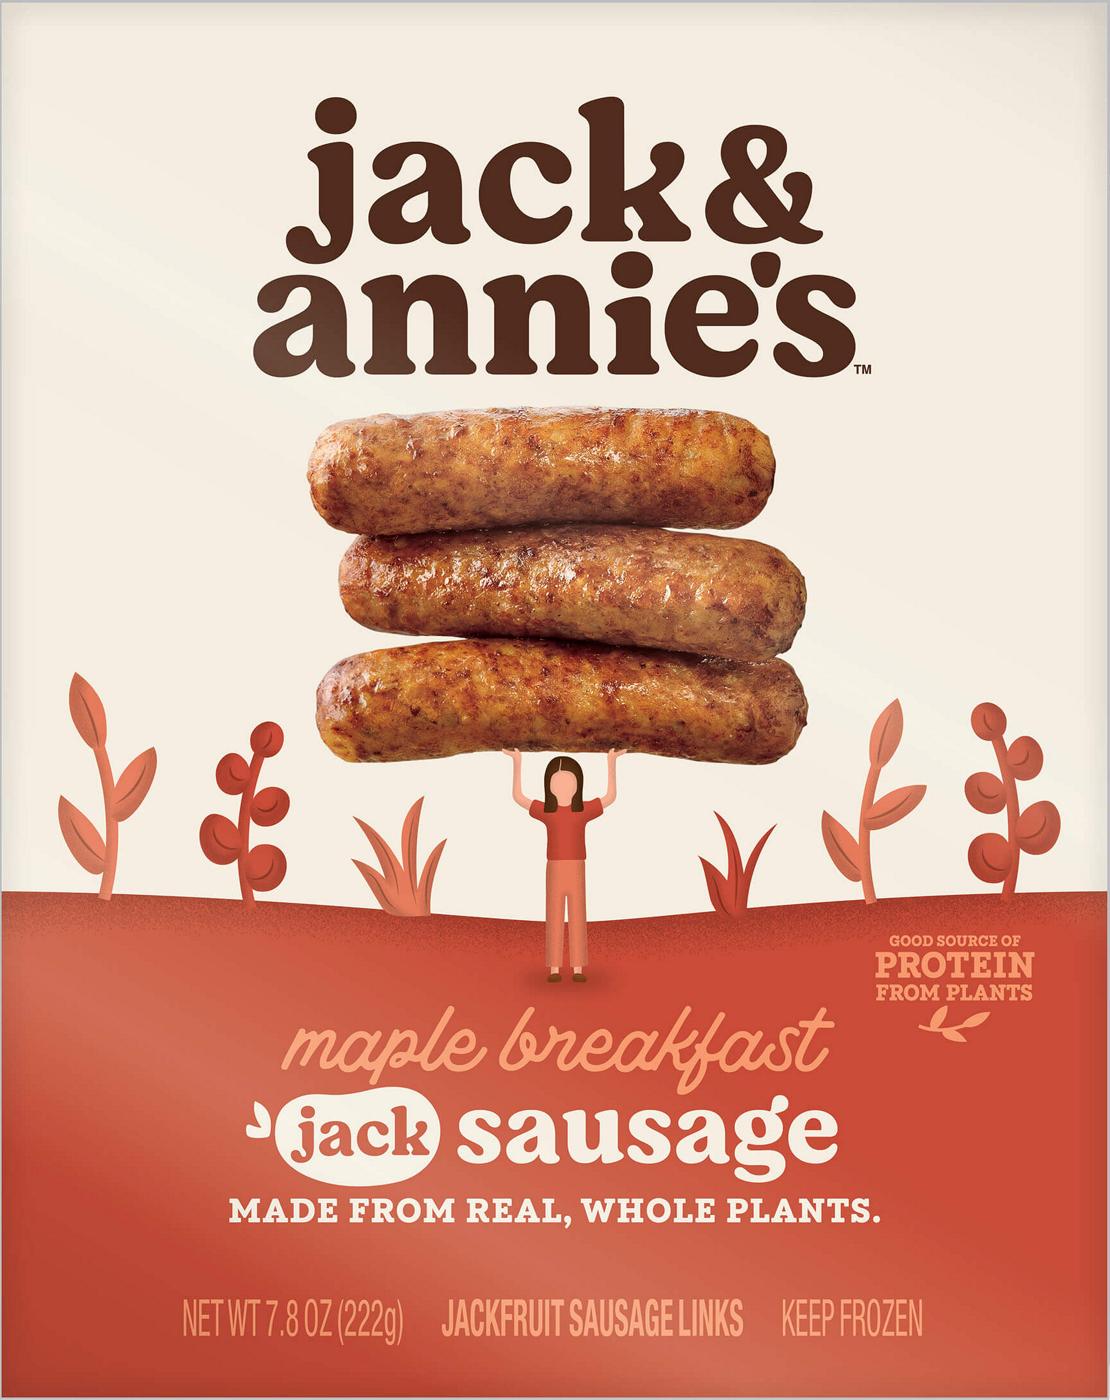 Jack & Annie's Maple Breakfast Jackfruit Sausage Links; image 1 of 3